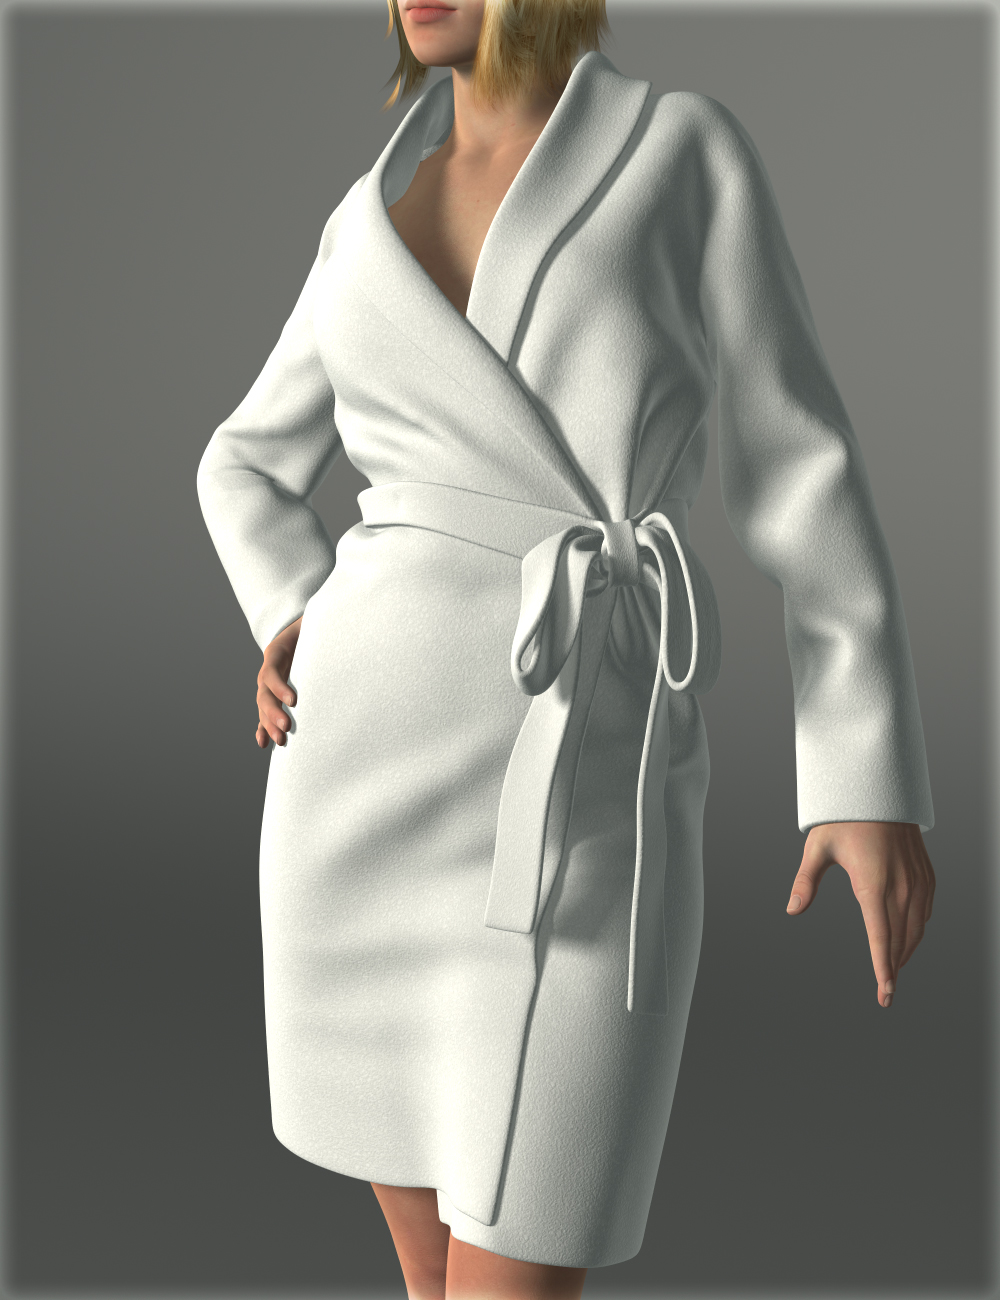 Bathrobe for Genesis 2 Female(s) by: IH Kang, 3D Models by Daz 3D